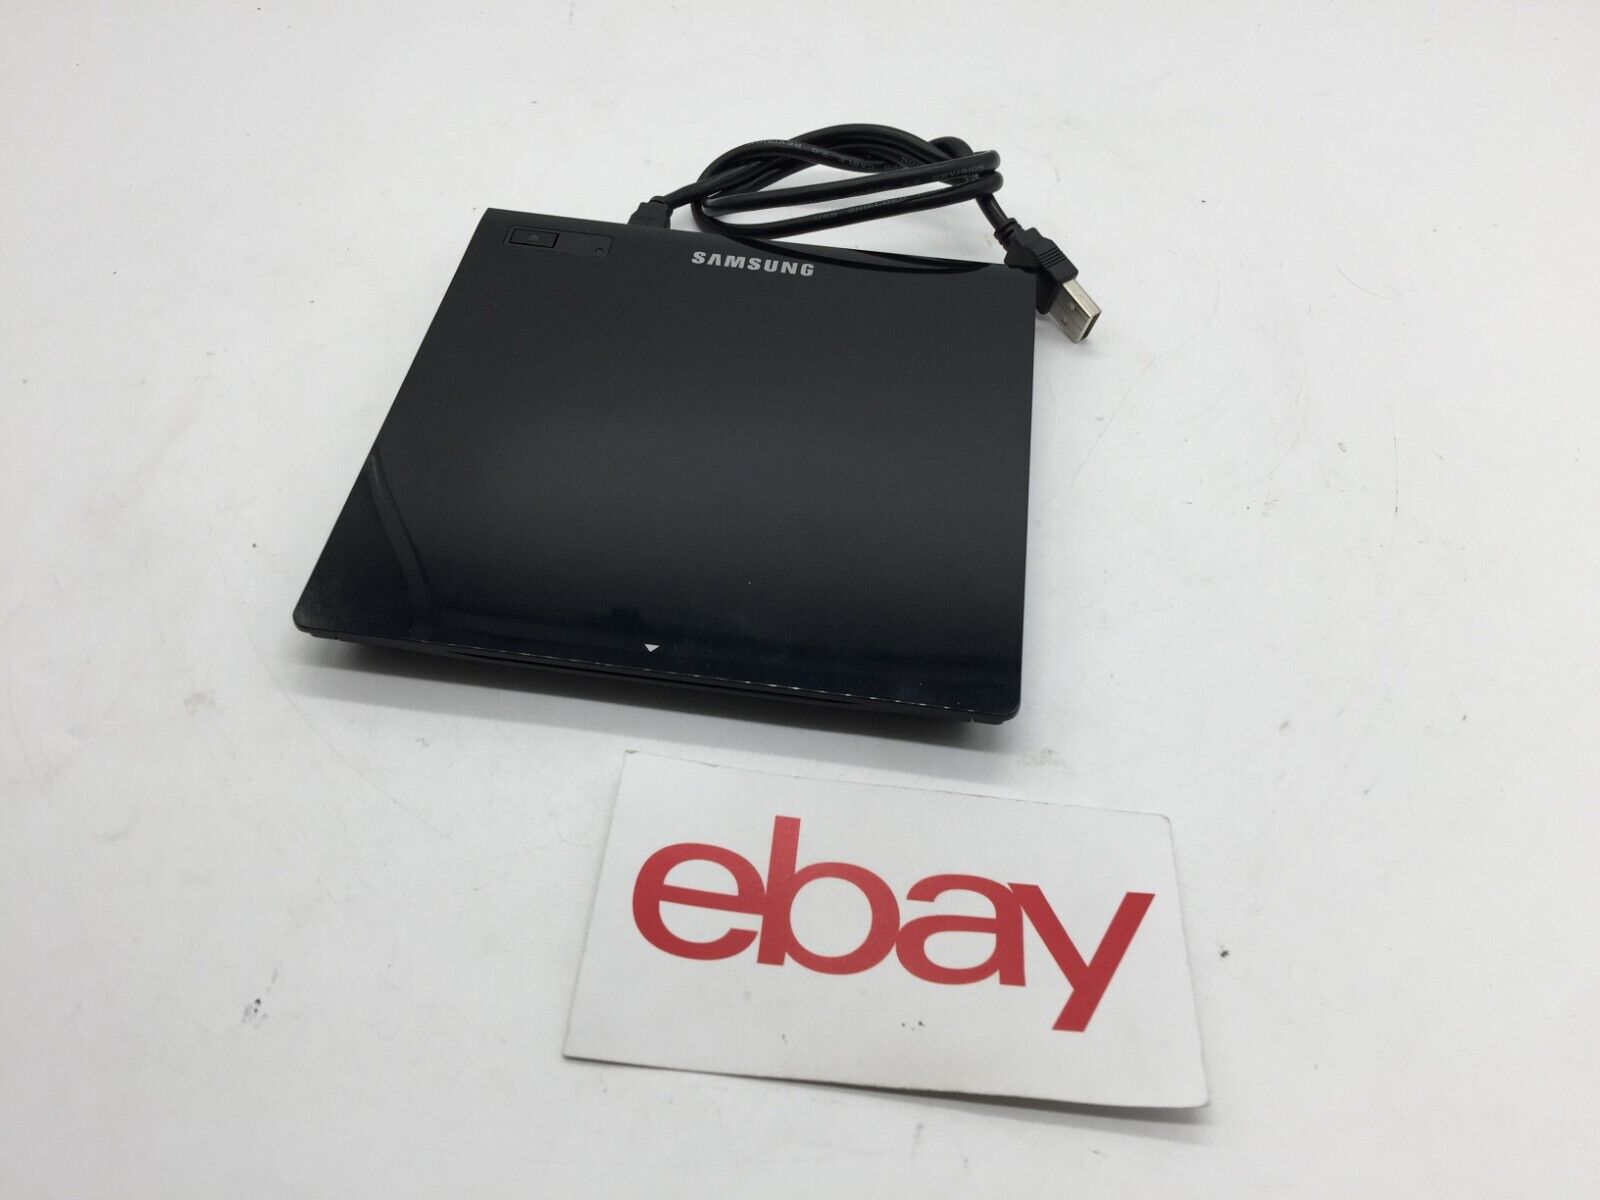 Samsung USB Ultra Slim Portable External DVD Writer SE-208 w/ Cable FREE S/H